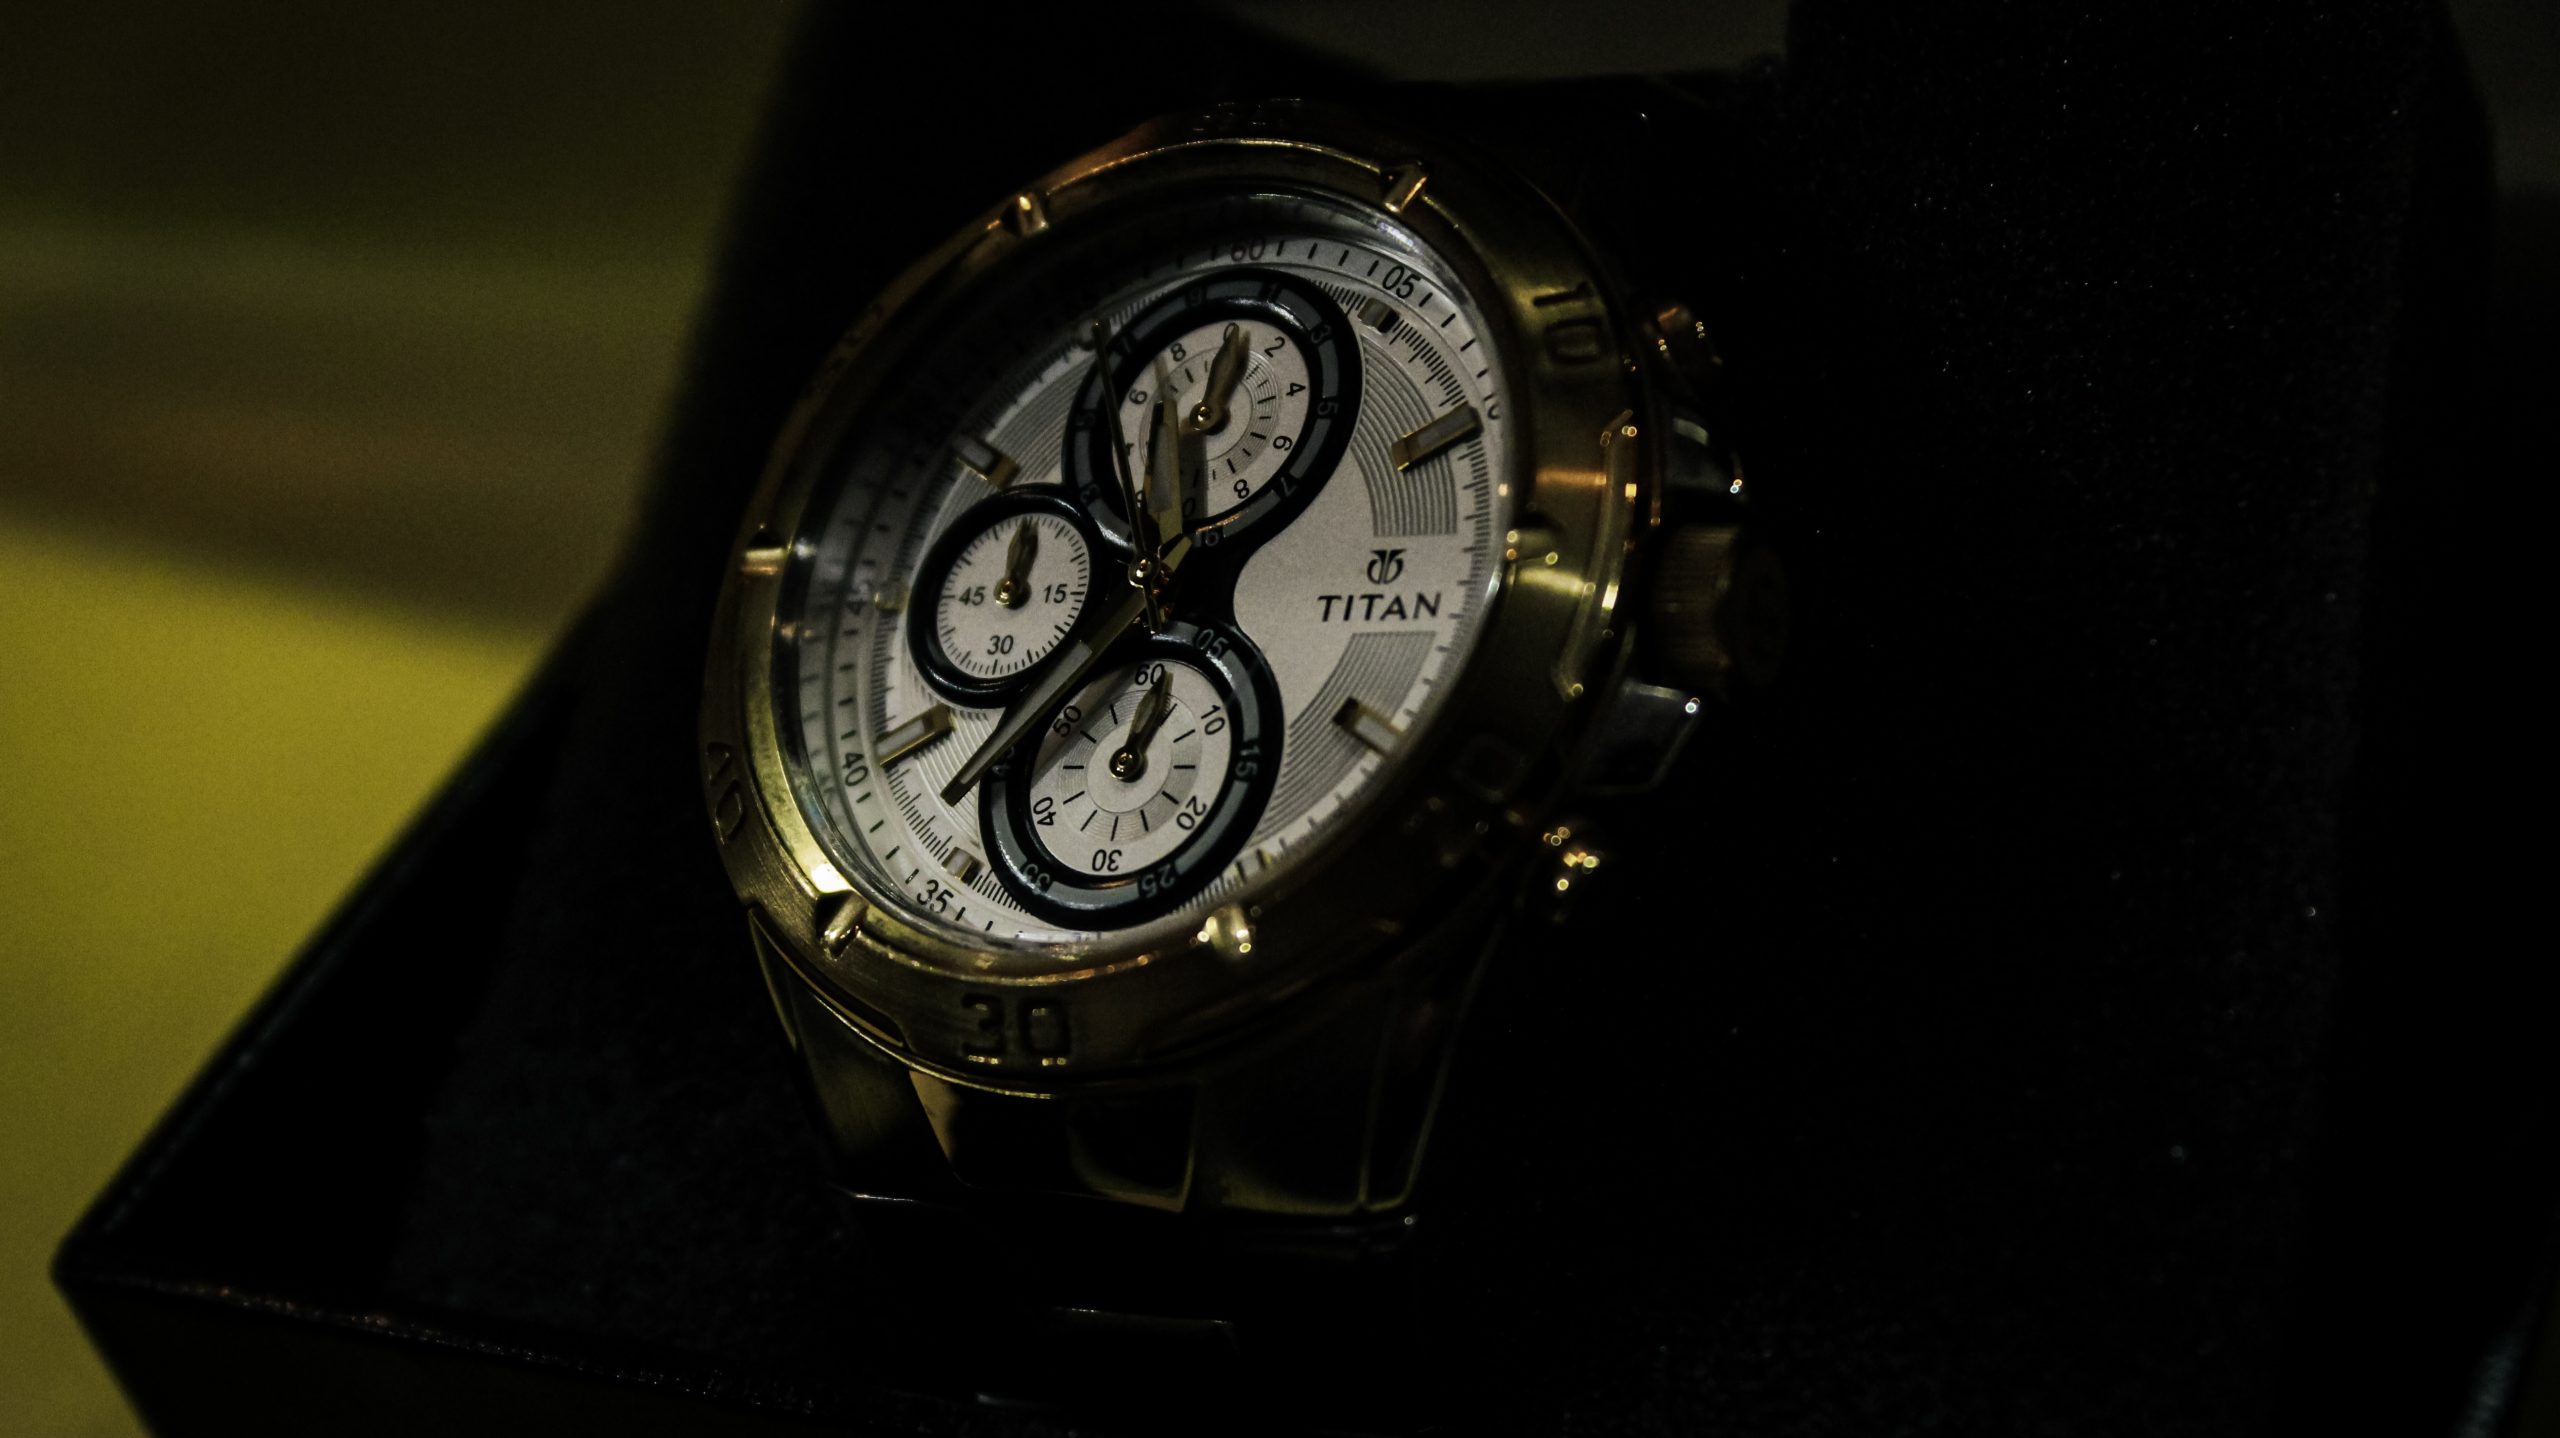 A Titan watch